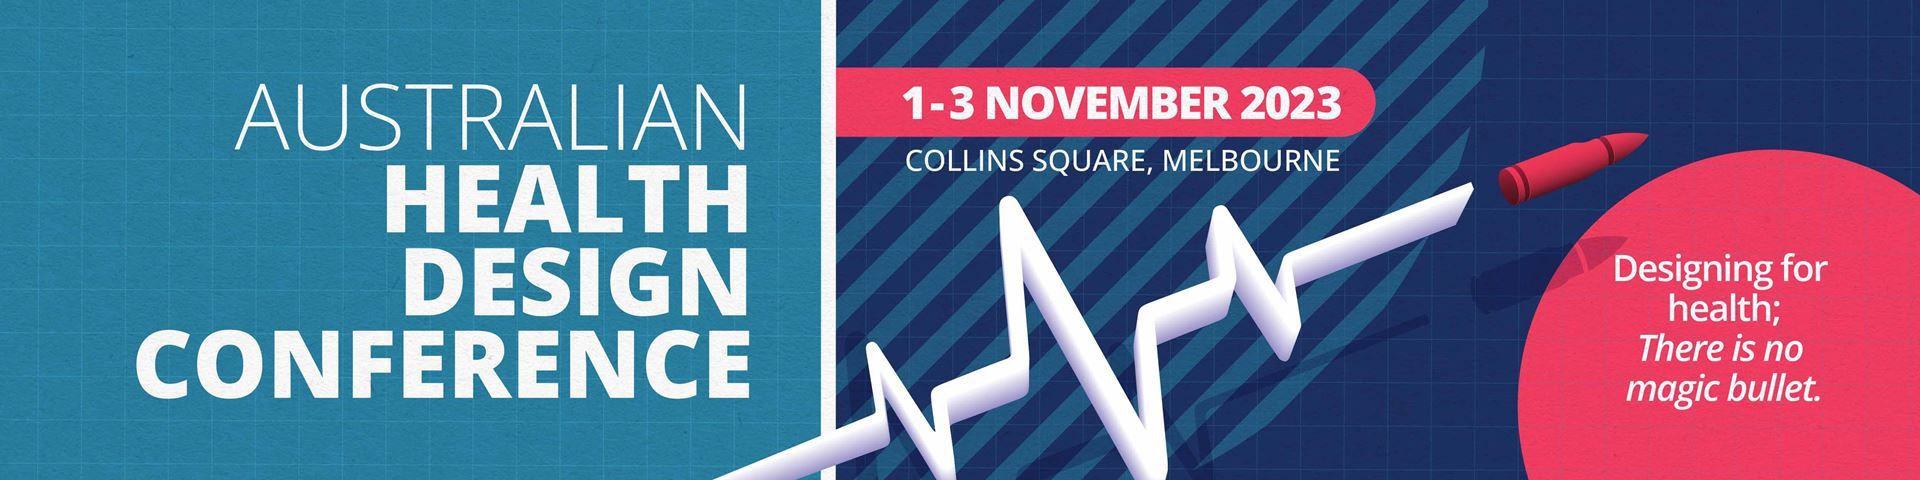 Australian Health Design Conference